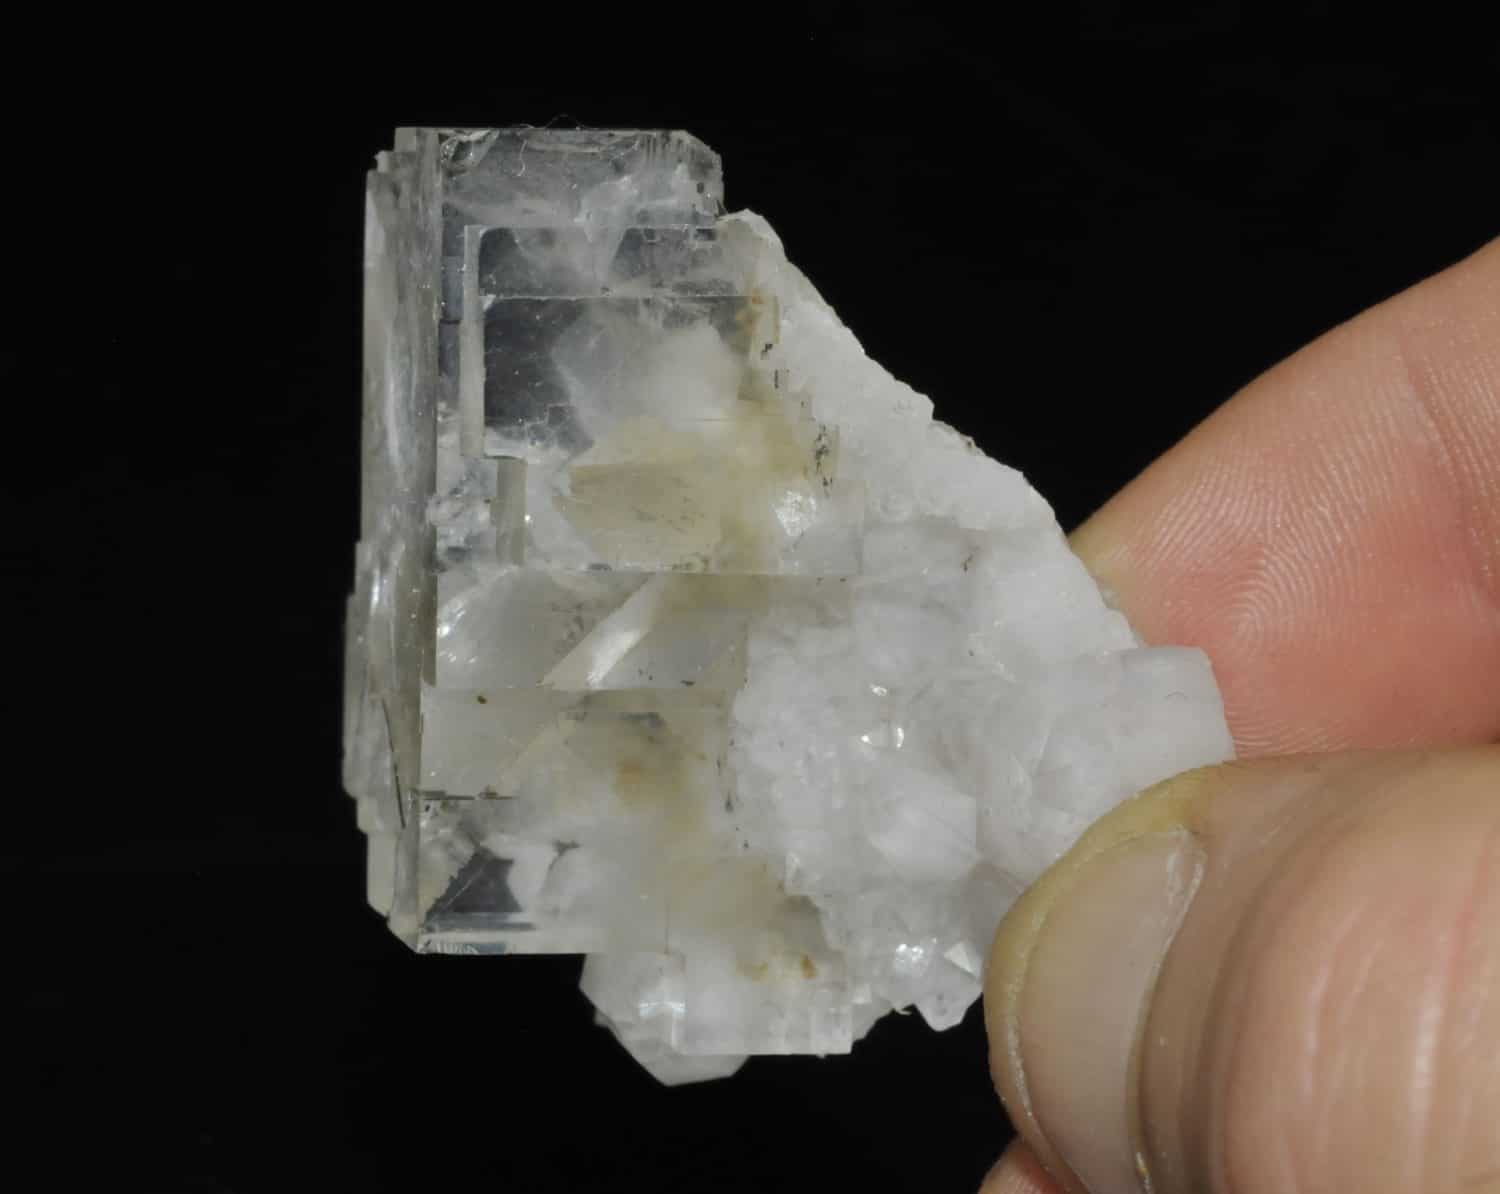 White fluorite from the Montroc mine (Tarn, France)